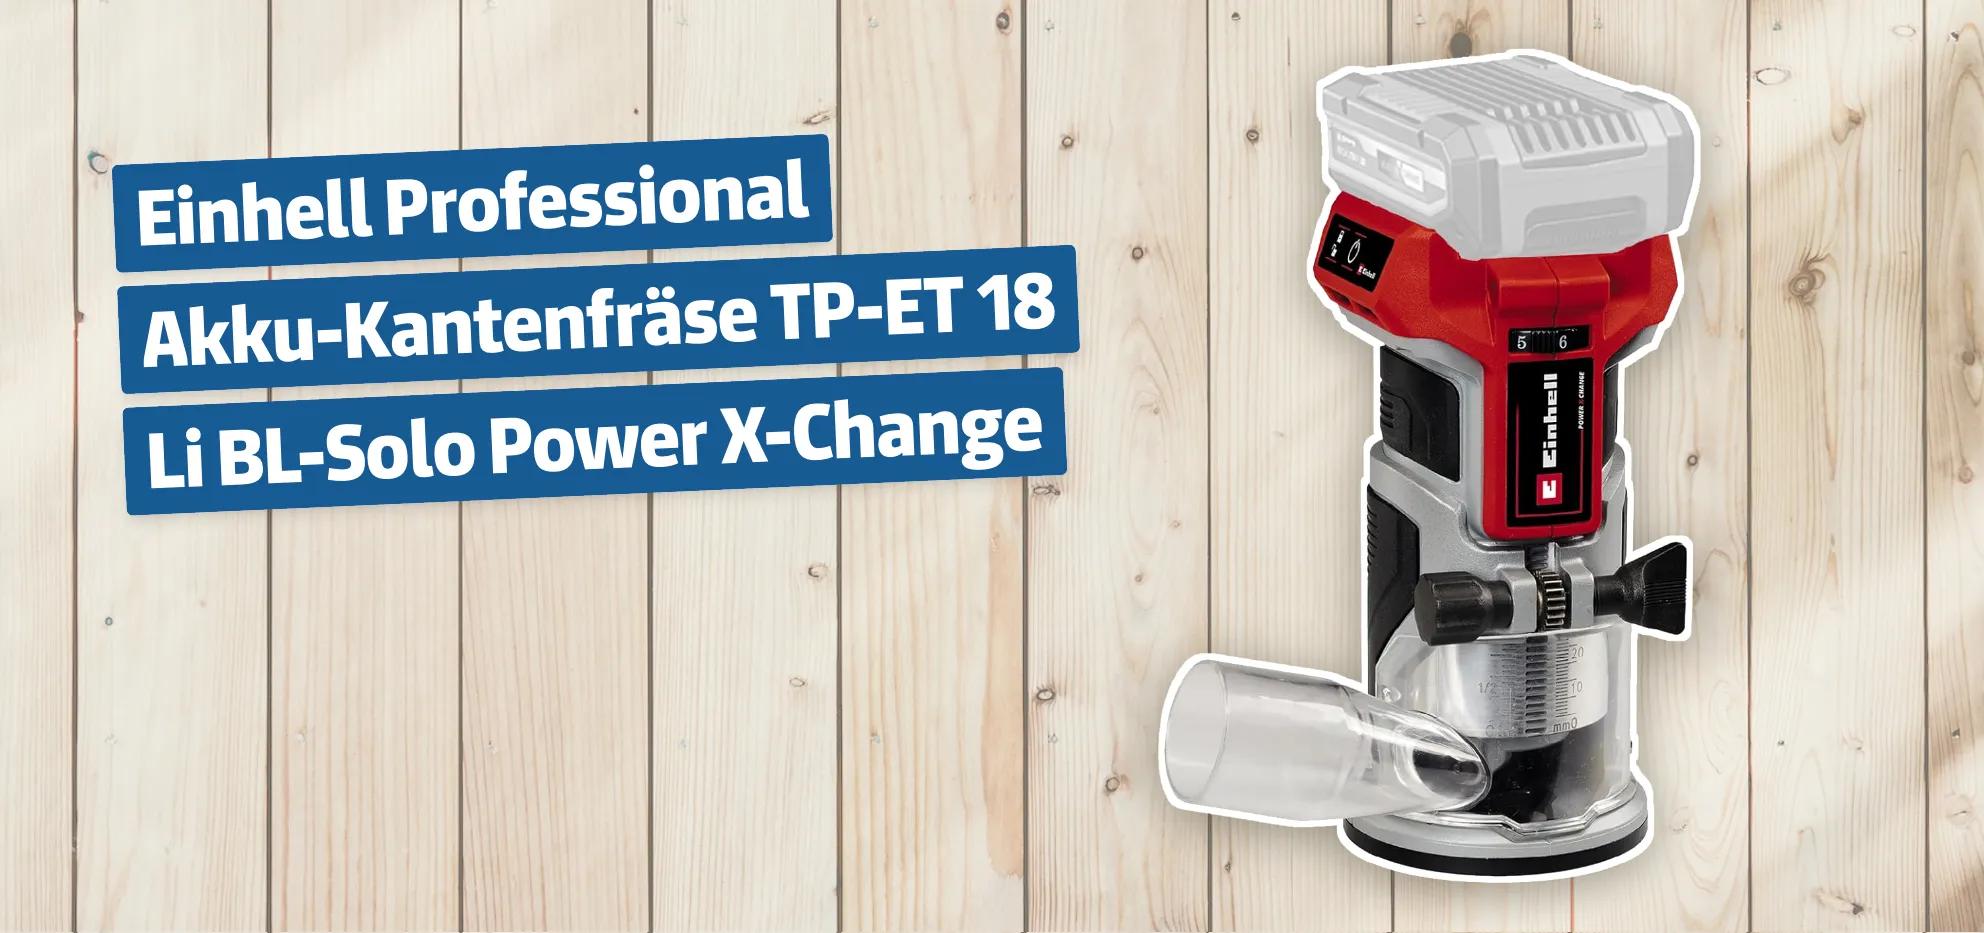 Einhell Professional Akku-Kantenfräse TP-ET 18 Li BL-Solo Power X-Change